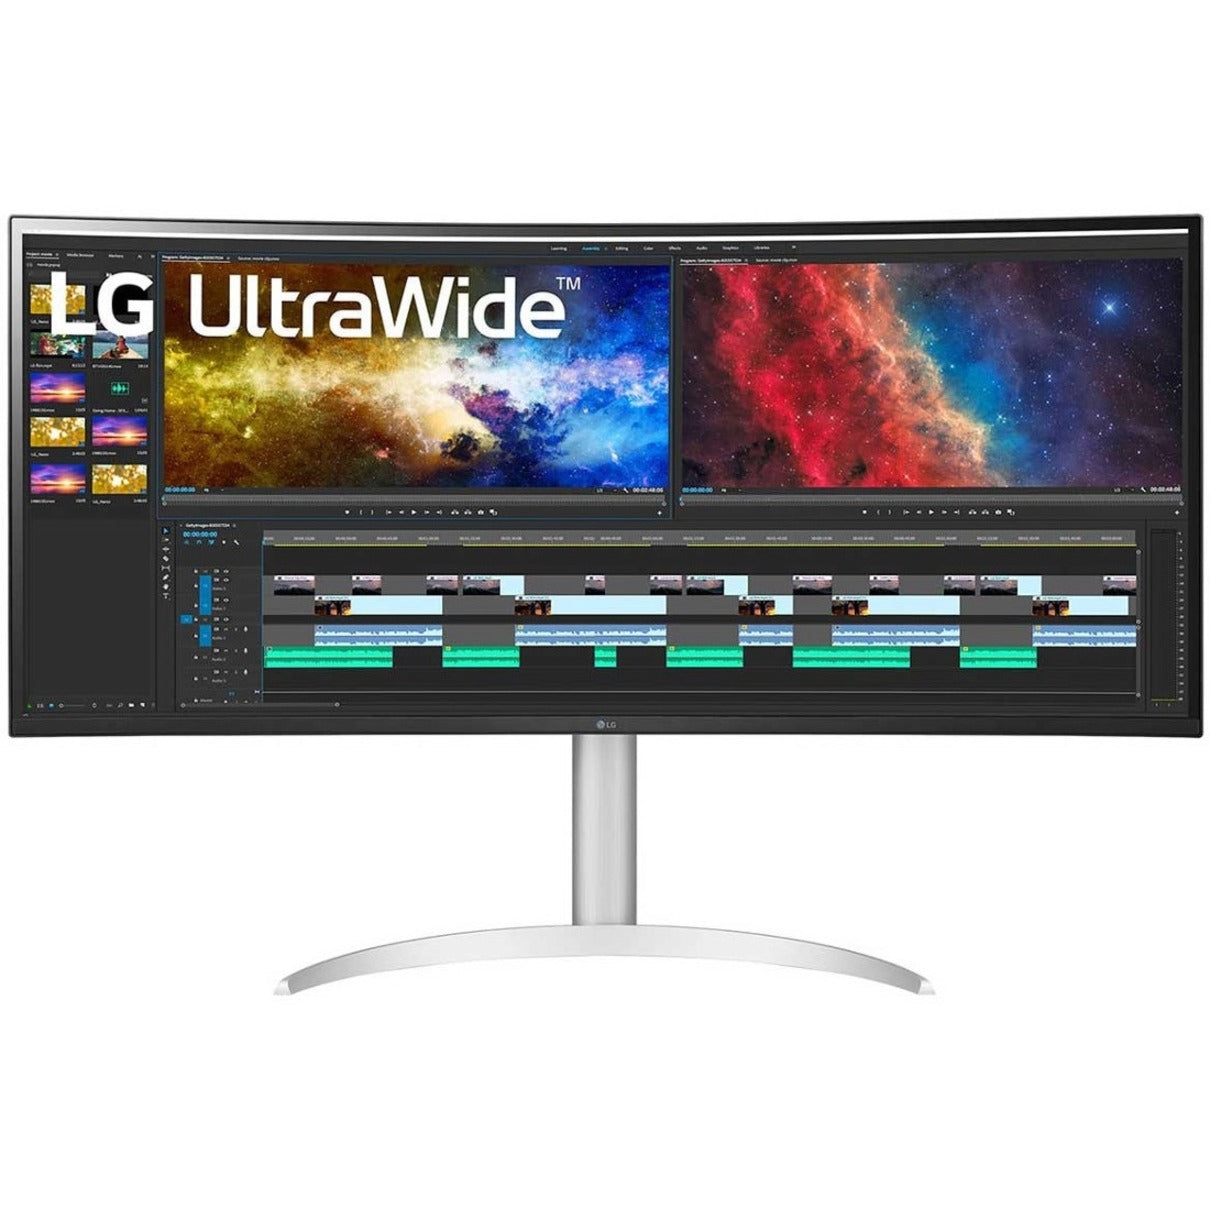 LG Ultrawide 38BP85C-W Widescreen Gaming LCD Monitor, 3840 x 1600, USB Type-C, HDMI, DP, AMD FreeSync, 2HDMI, 300 Nit, 95% DCI-P3 (CIE 1976), 1.07 Billion Colors, 3 Year Warranty